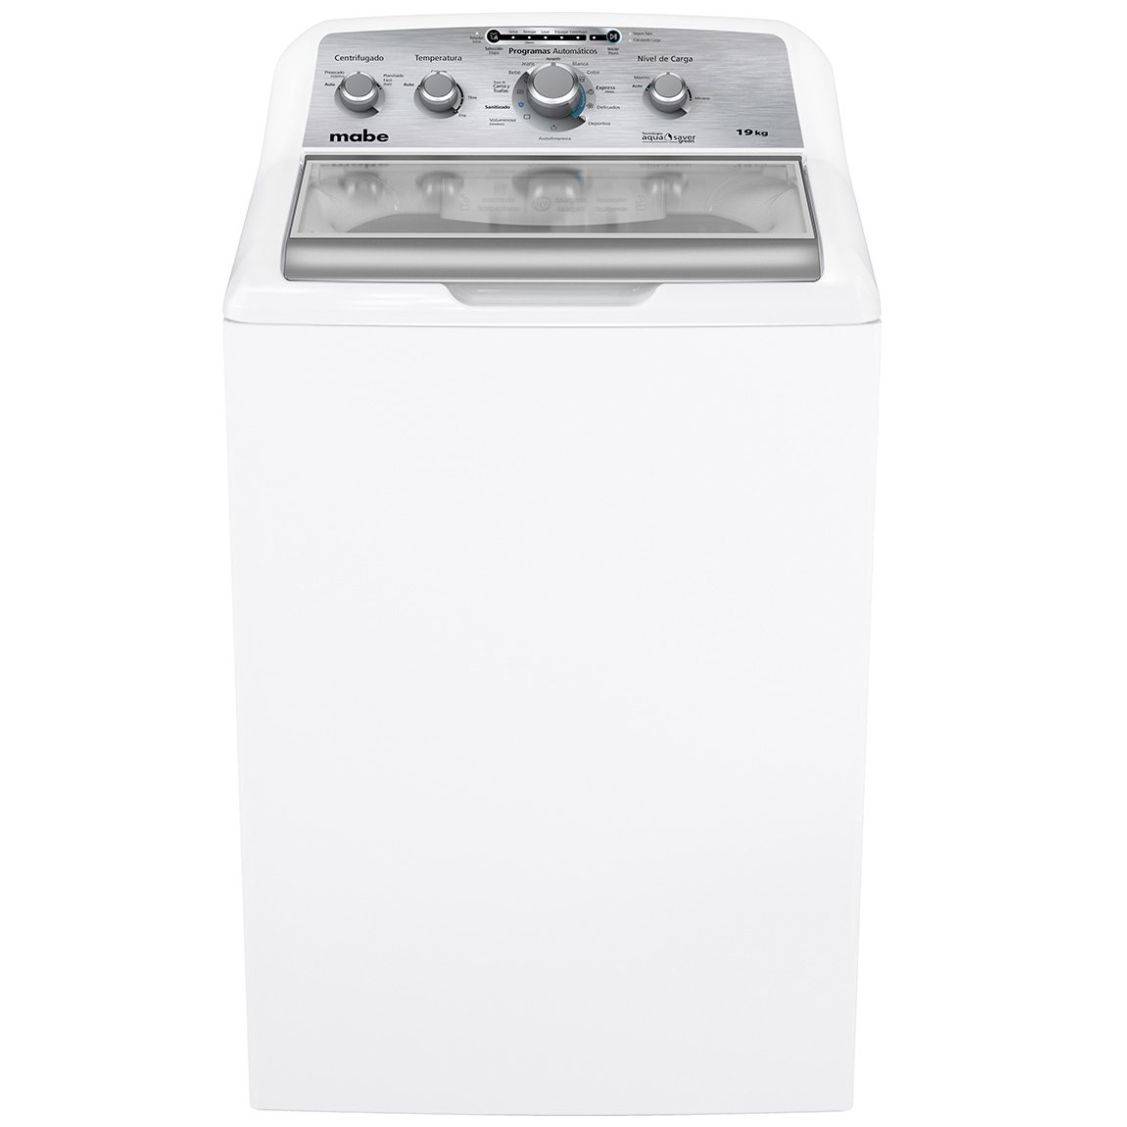 lavadora-mabe-carga-superior-19kg-lmx79114wbab0-blanca